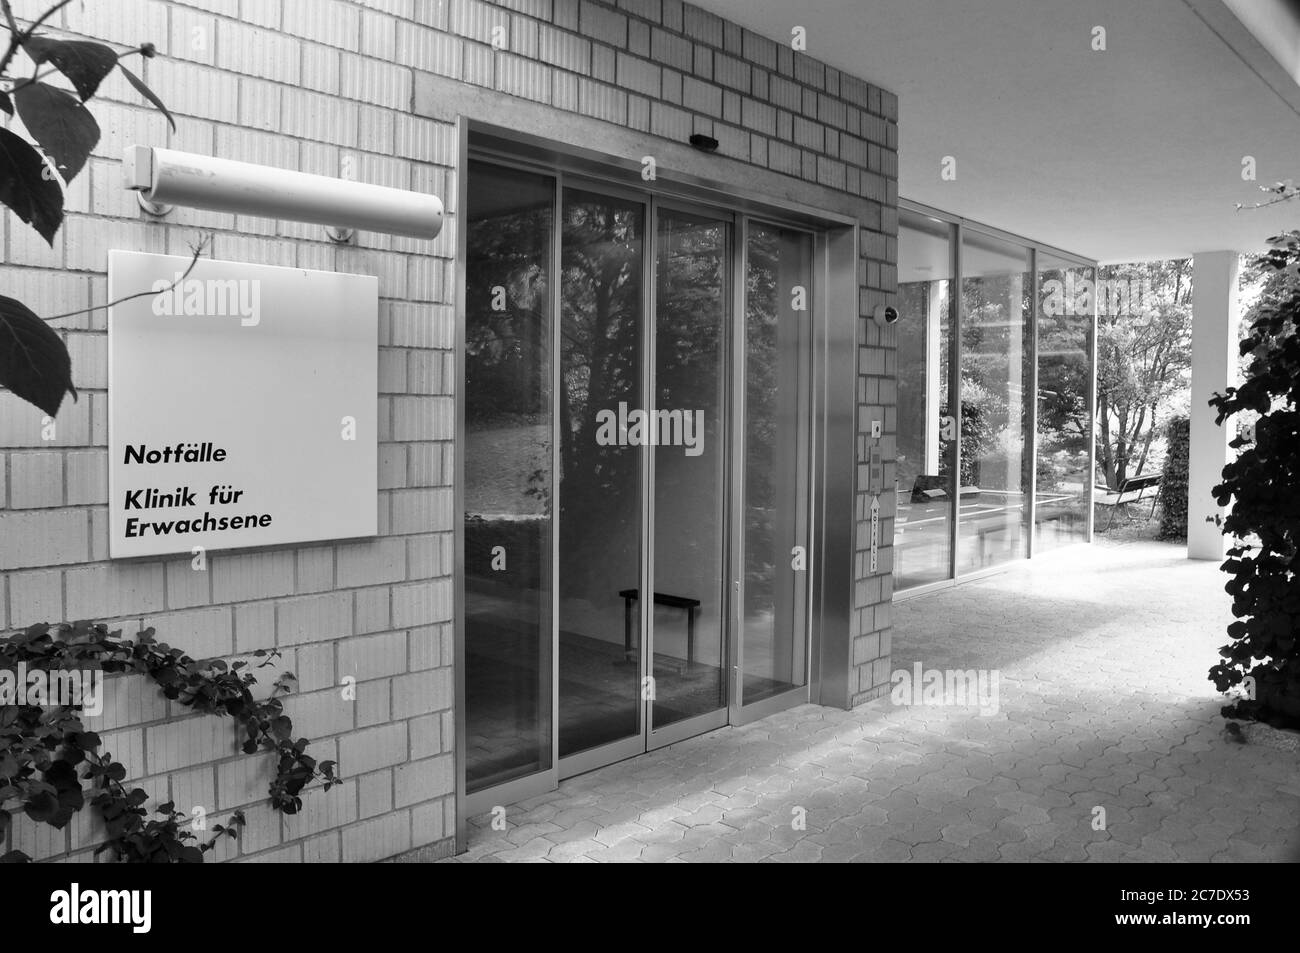 Der Notfall-Eingang des Schweiz. Epilepsie-Zentrums. L'ingresso di emergenza del centro svizzero di epilessia Foto Stock